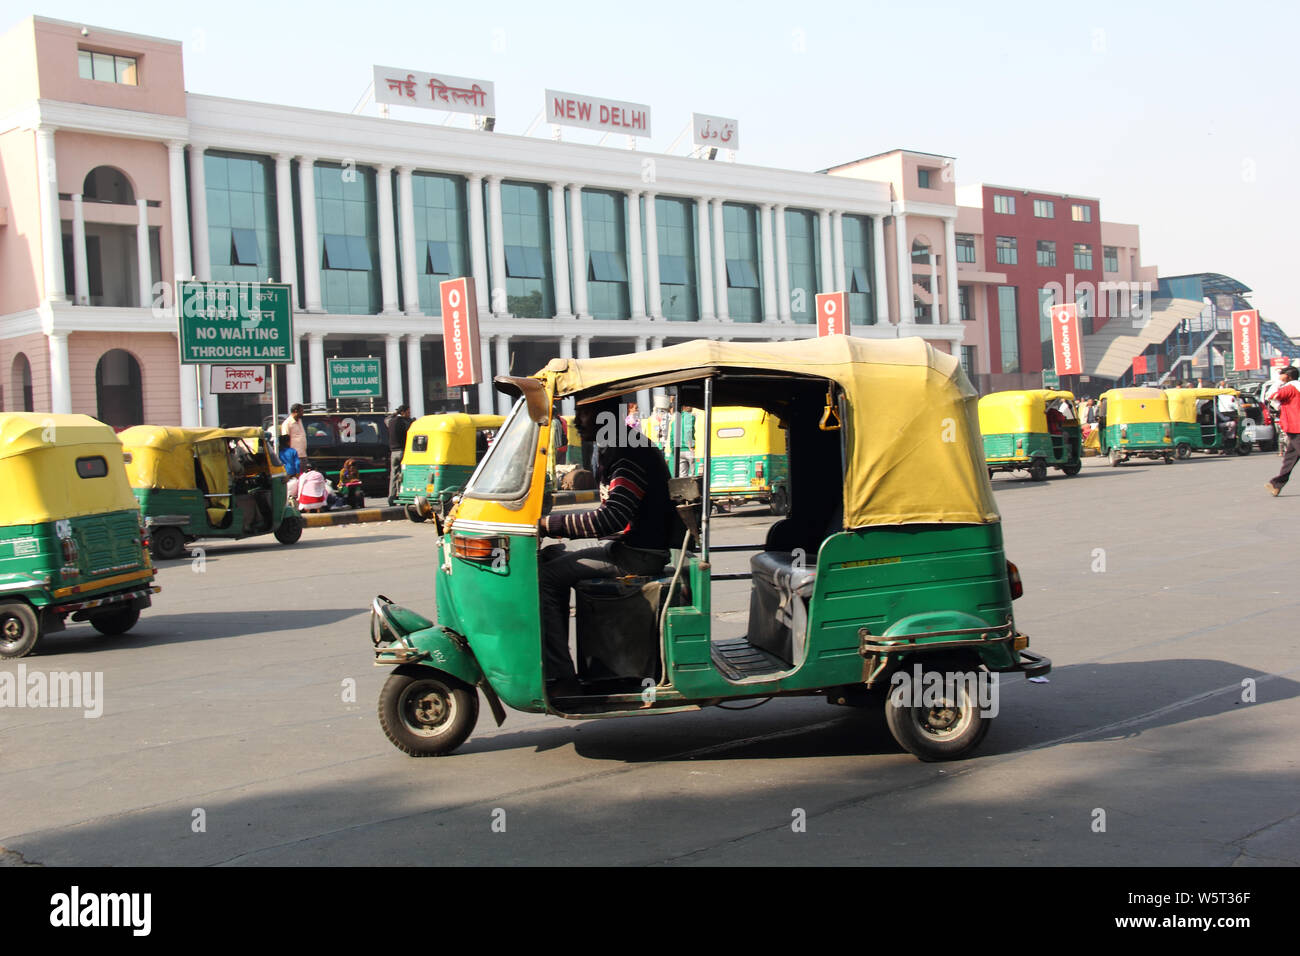 Auto rickshaws outside of New Delhi Railway station, India Stock Photo